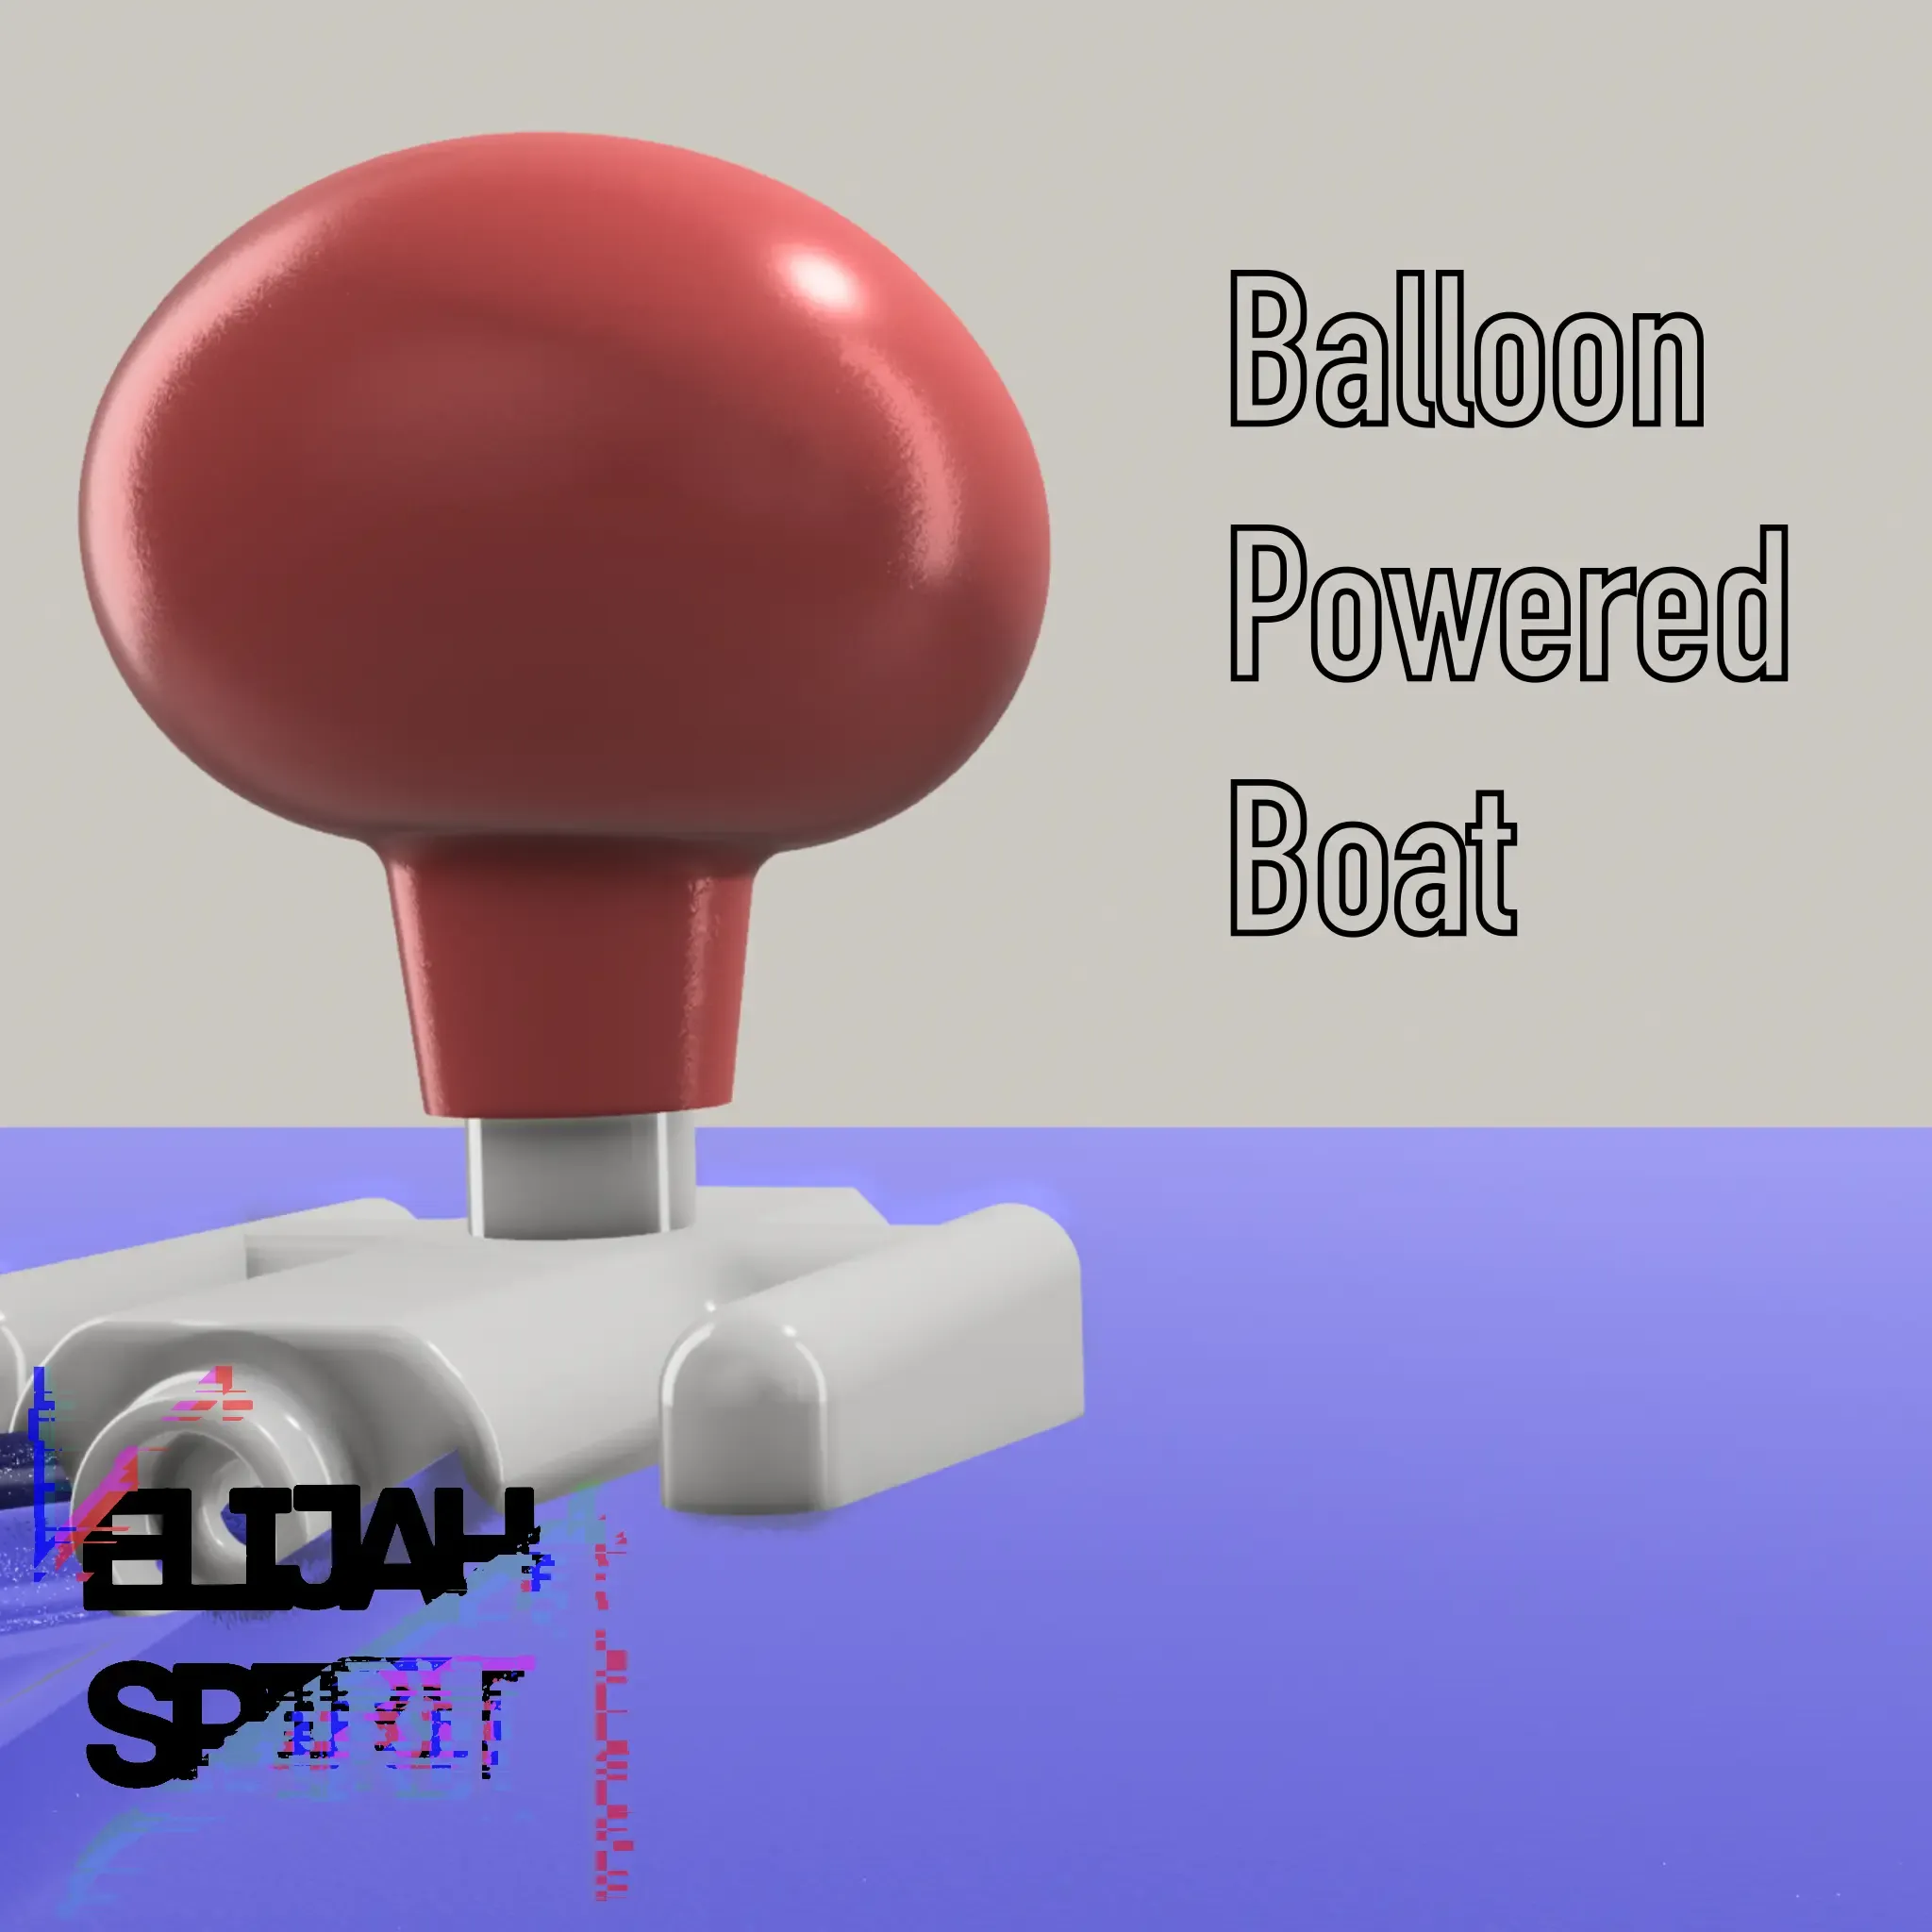 High speed Balloon powered boat